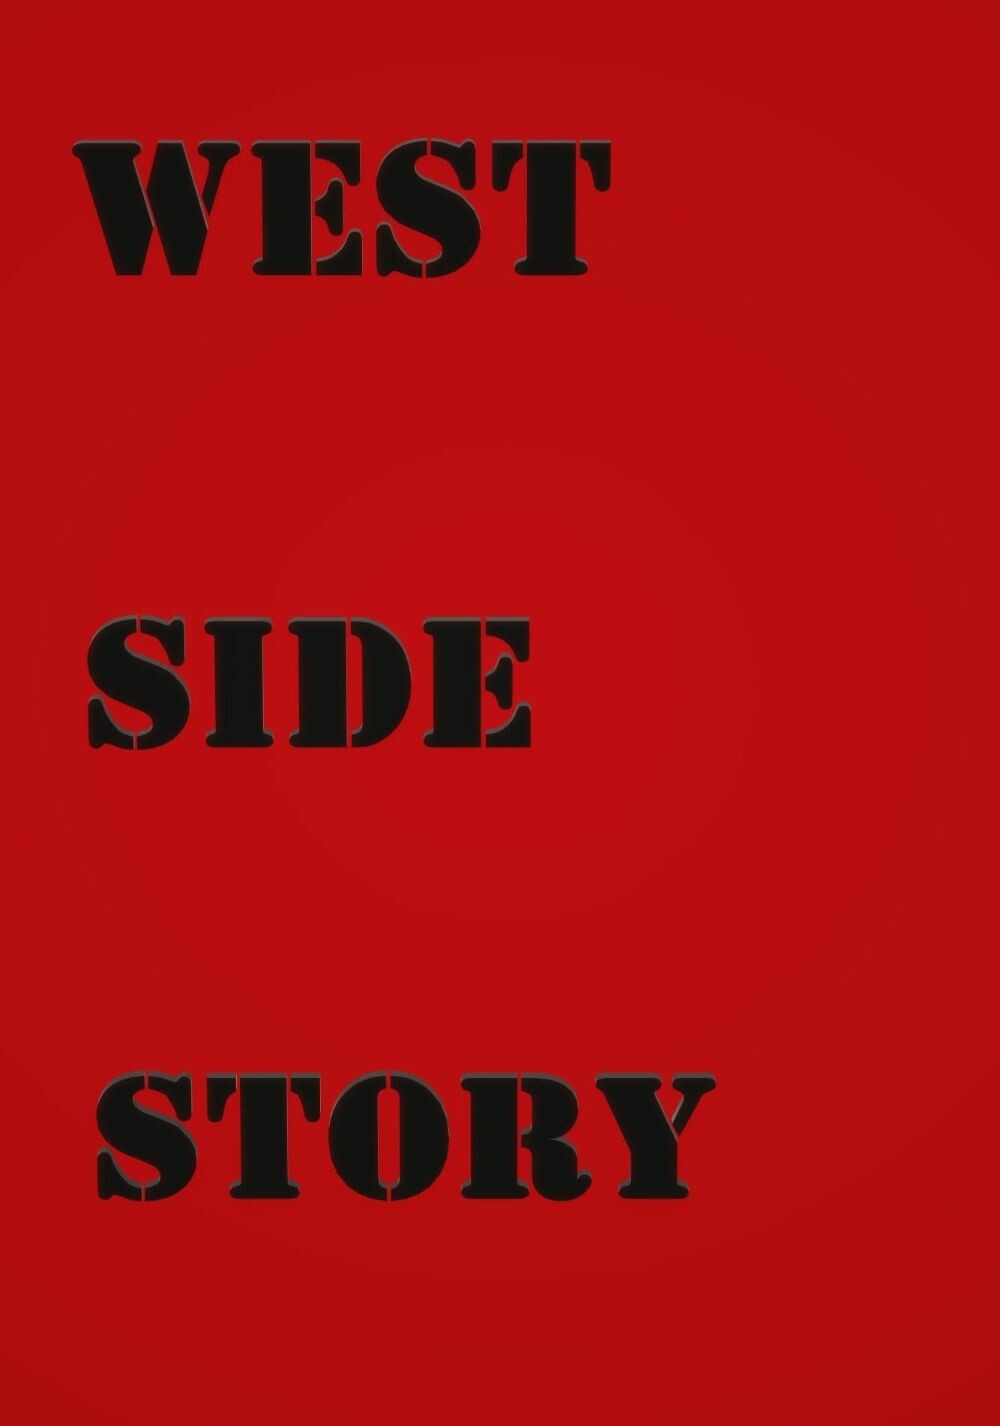 West Side Story 2021 1080p BluRay x264-SPIELBERG